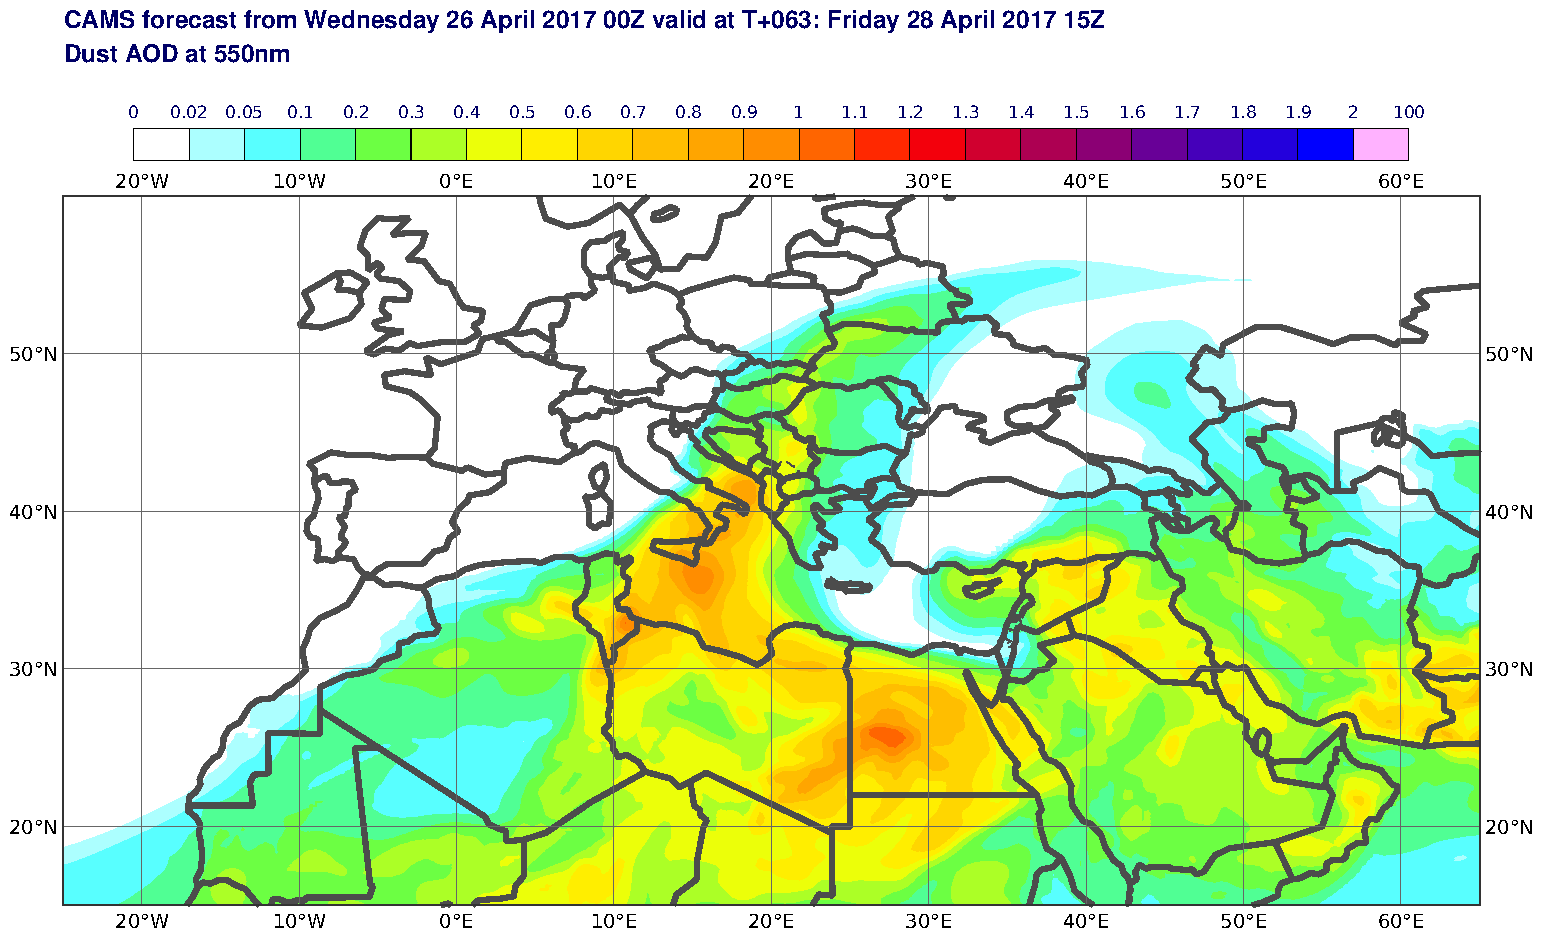 Dust AOD at 550nm valid at T63 - 2017-04-28 15:00